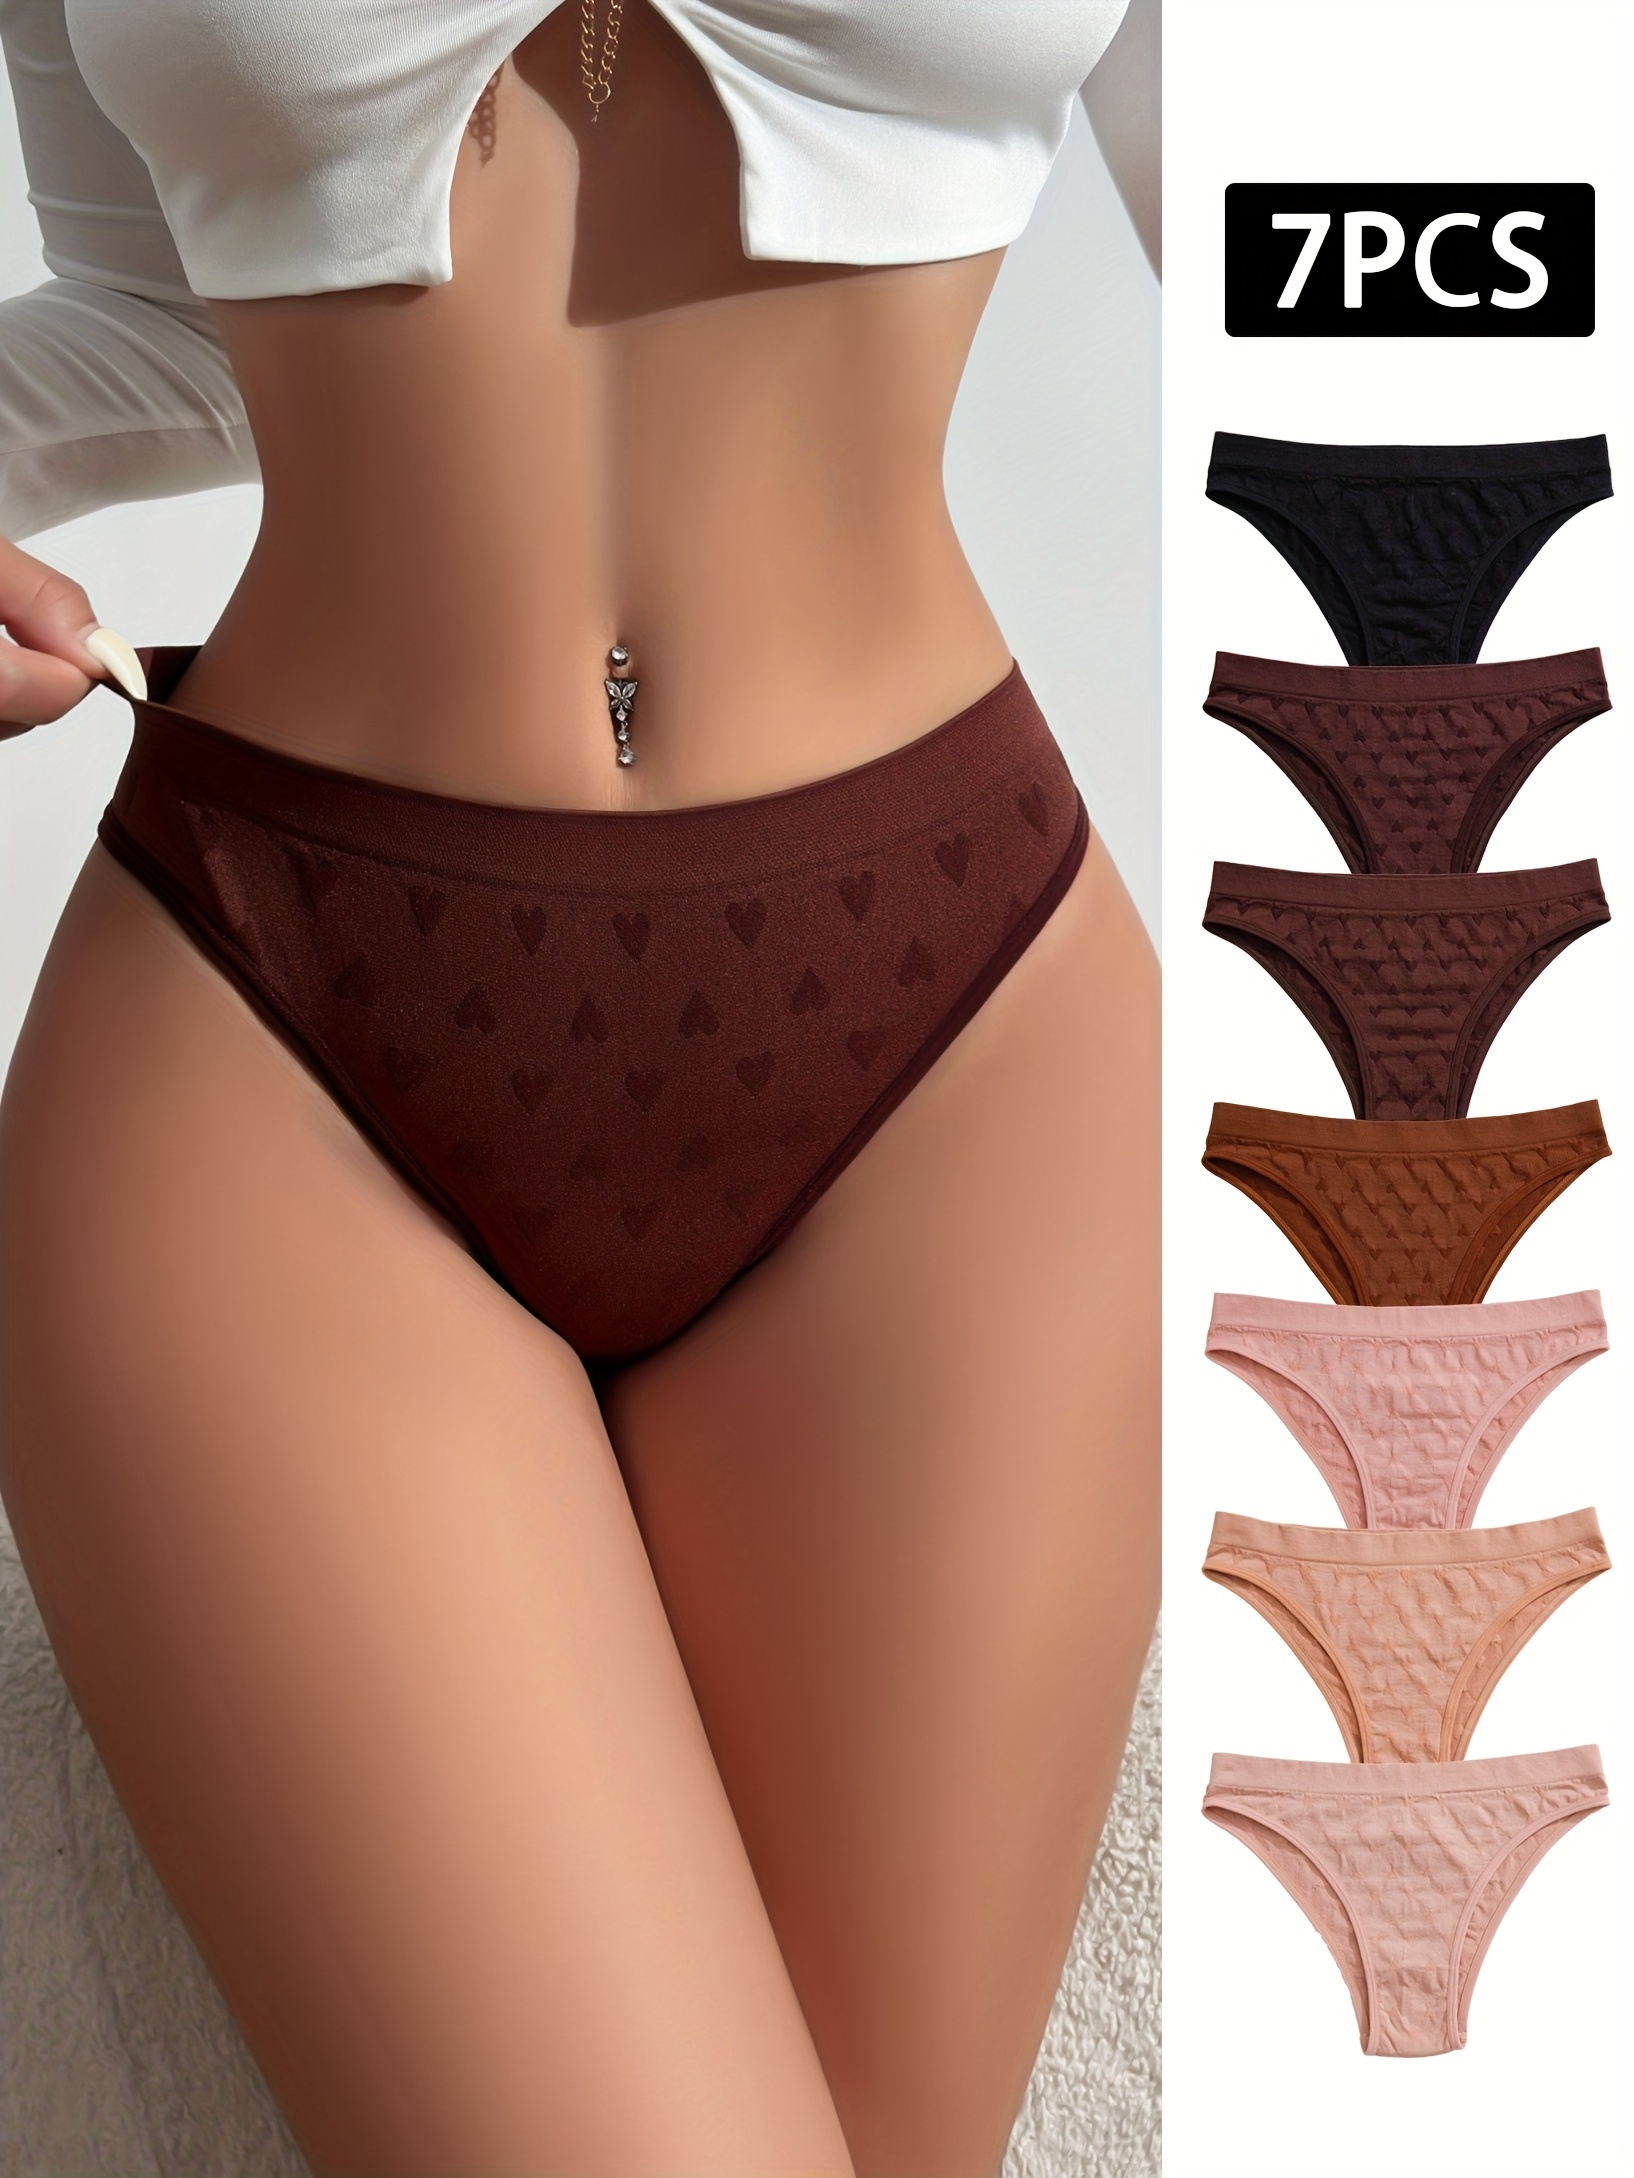 7pcs Solid Heart Jacquard Low Waist Briefs, Soft & Comfy Stretchy Panties,  Women's Lingerie & Underwear